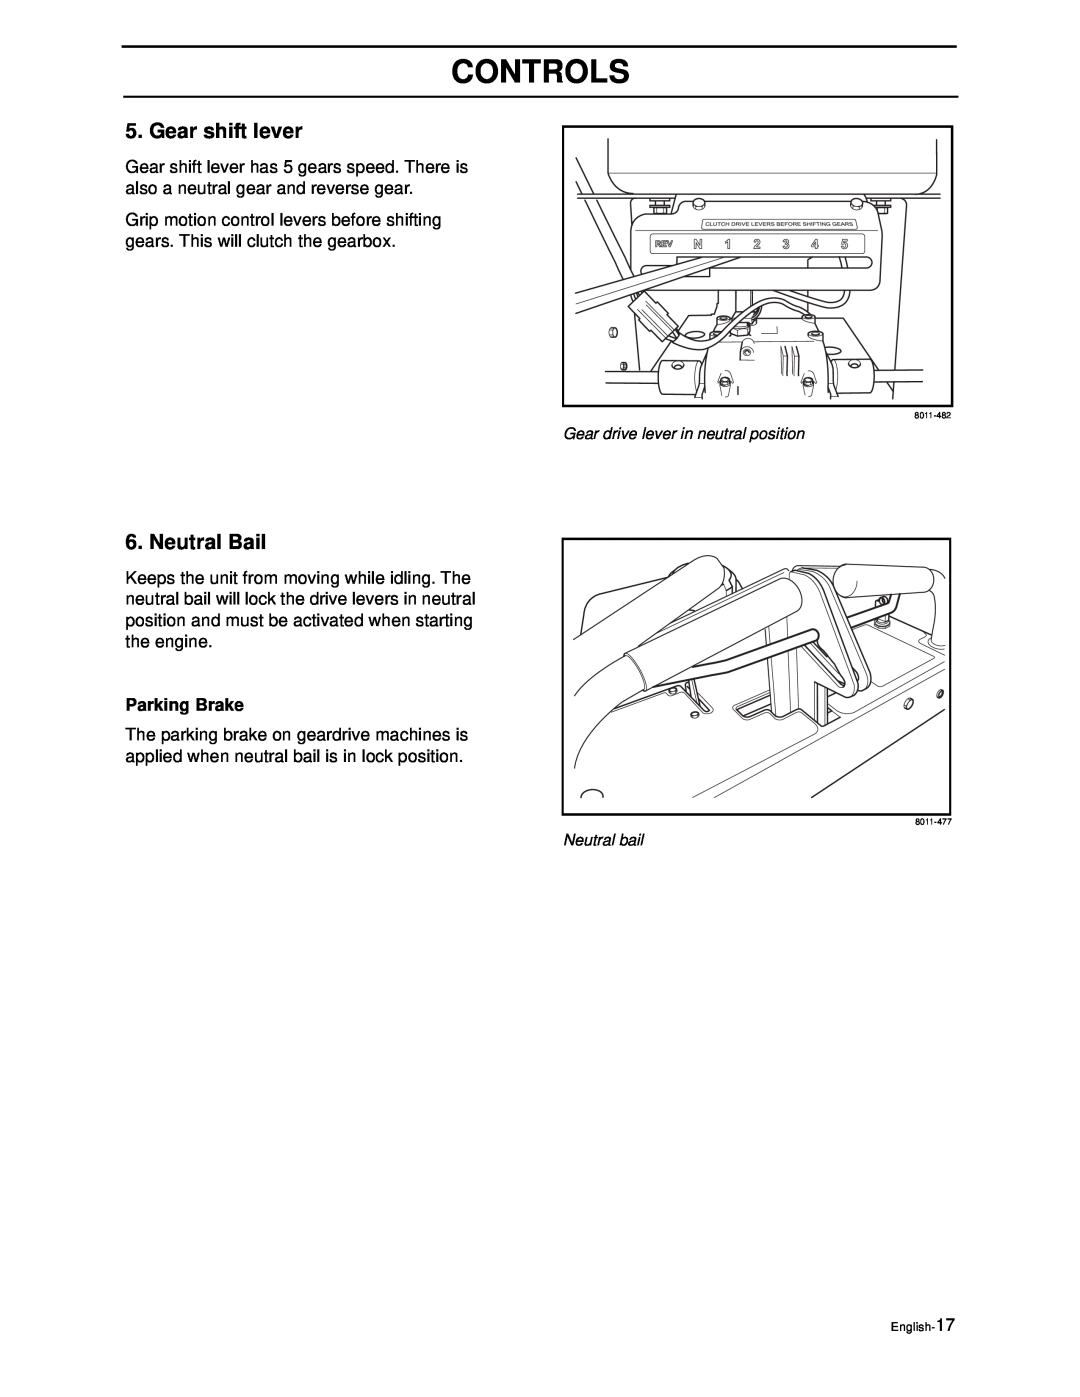 Husqvarna WG4815E, WG3613E manual Gear shift lever, Neutral Bail, Controls, Parking Brake 